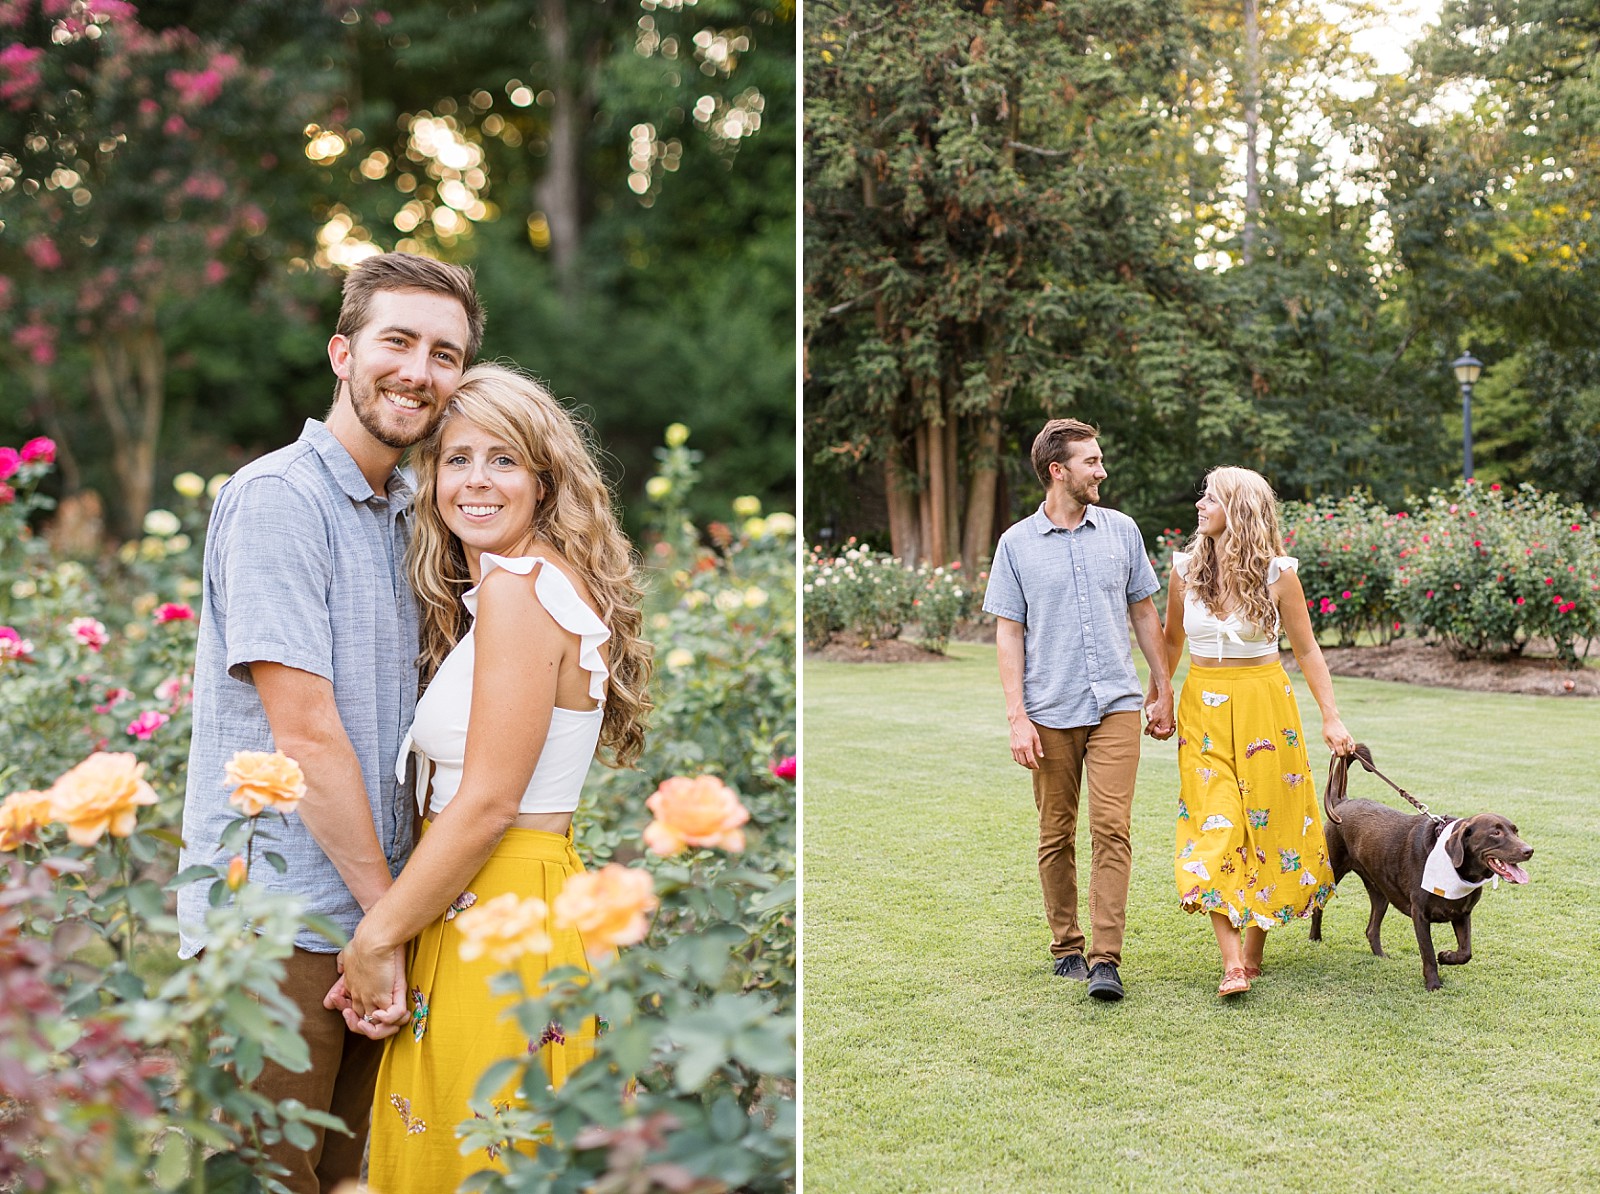 Raleigh Rose Garden Anniversary Photos | Raleigh Portrait Photographer | Raleigh NC Wedding Photographer